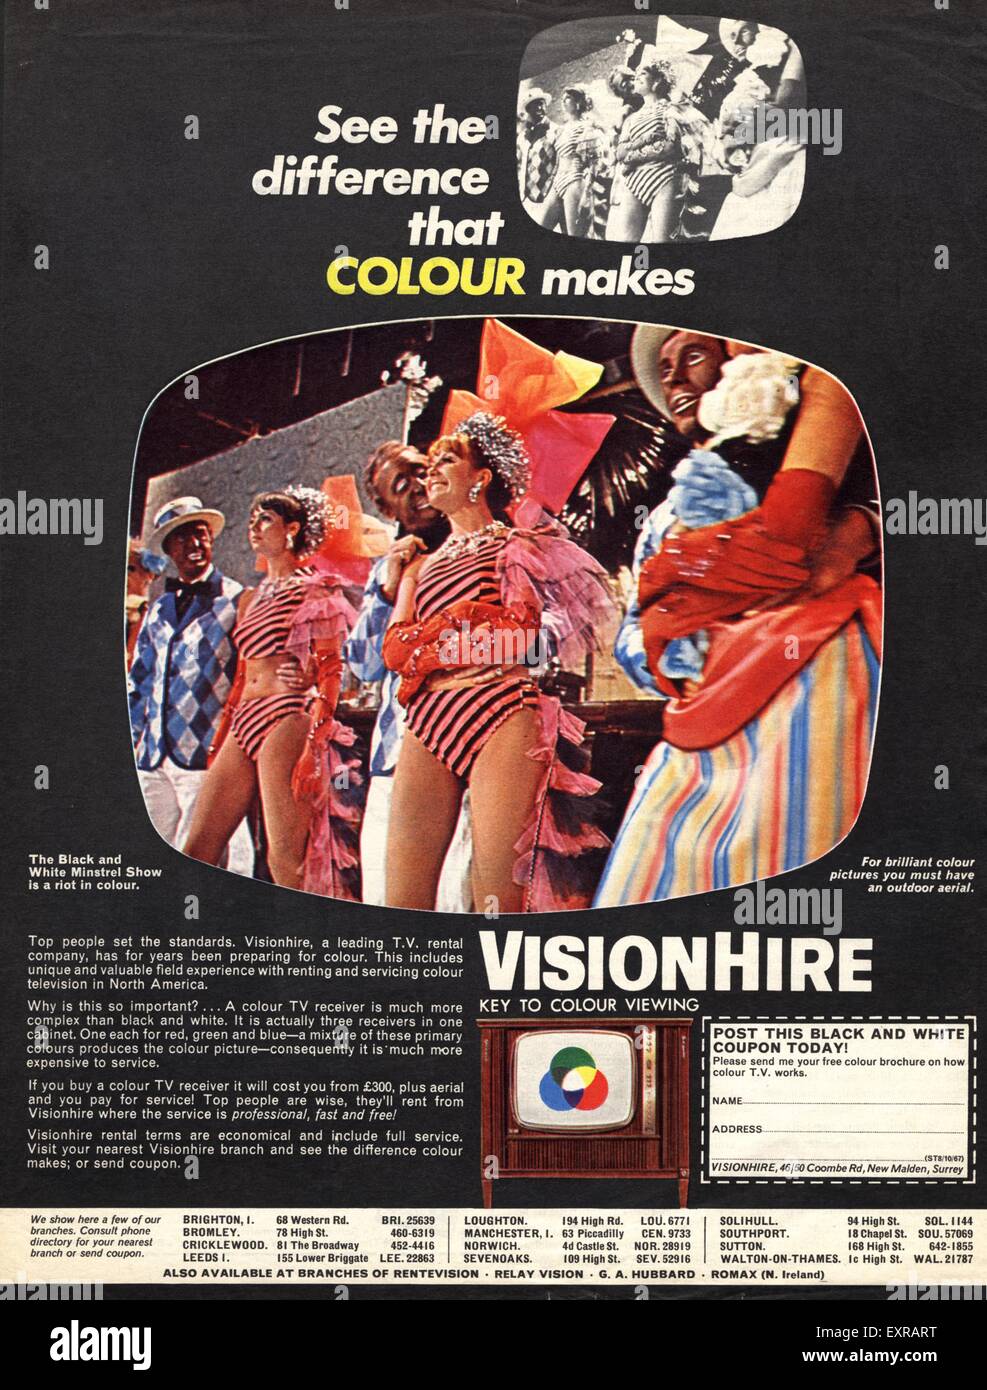 1970s-uk-visionhire-colour-television-magazine-advert-EXRART.jpg